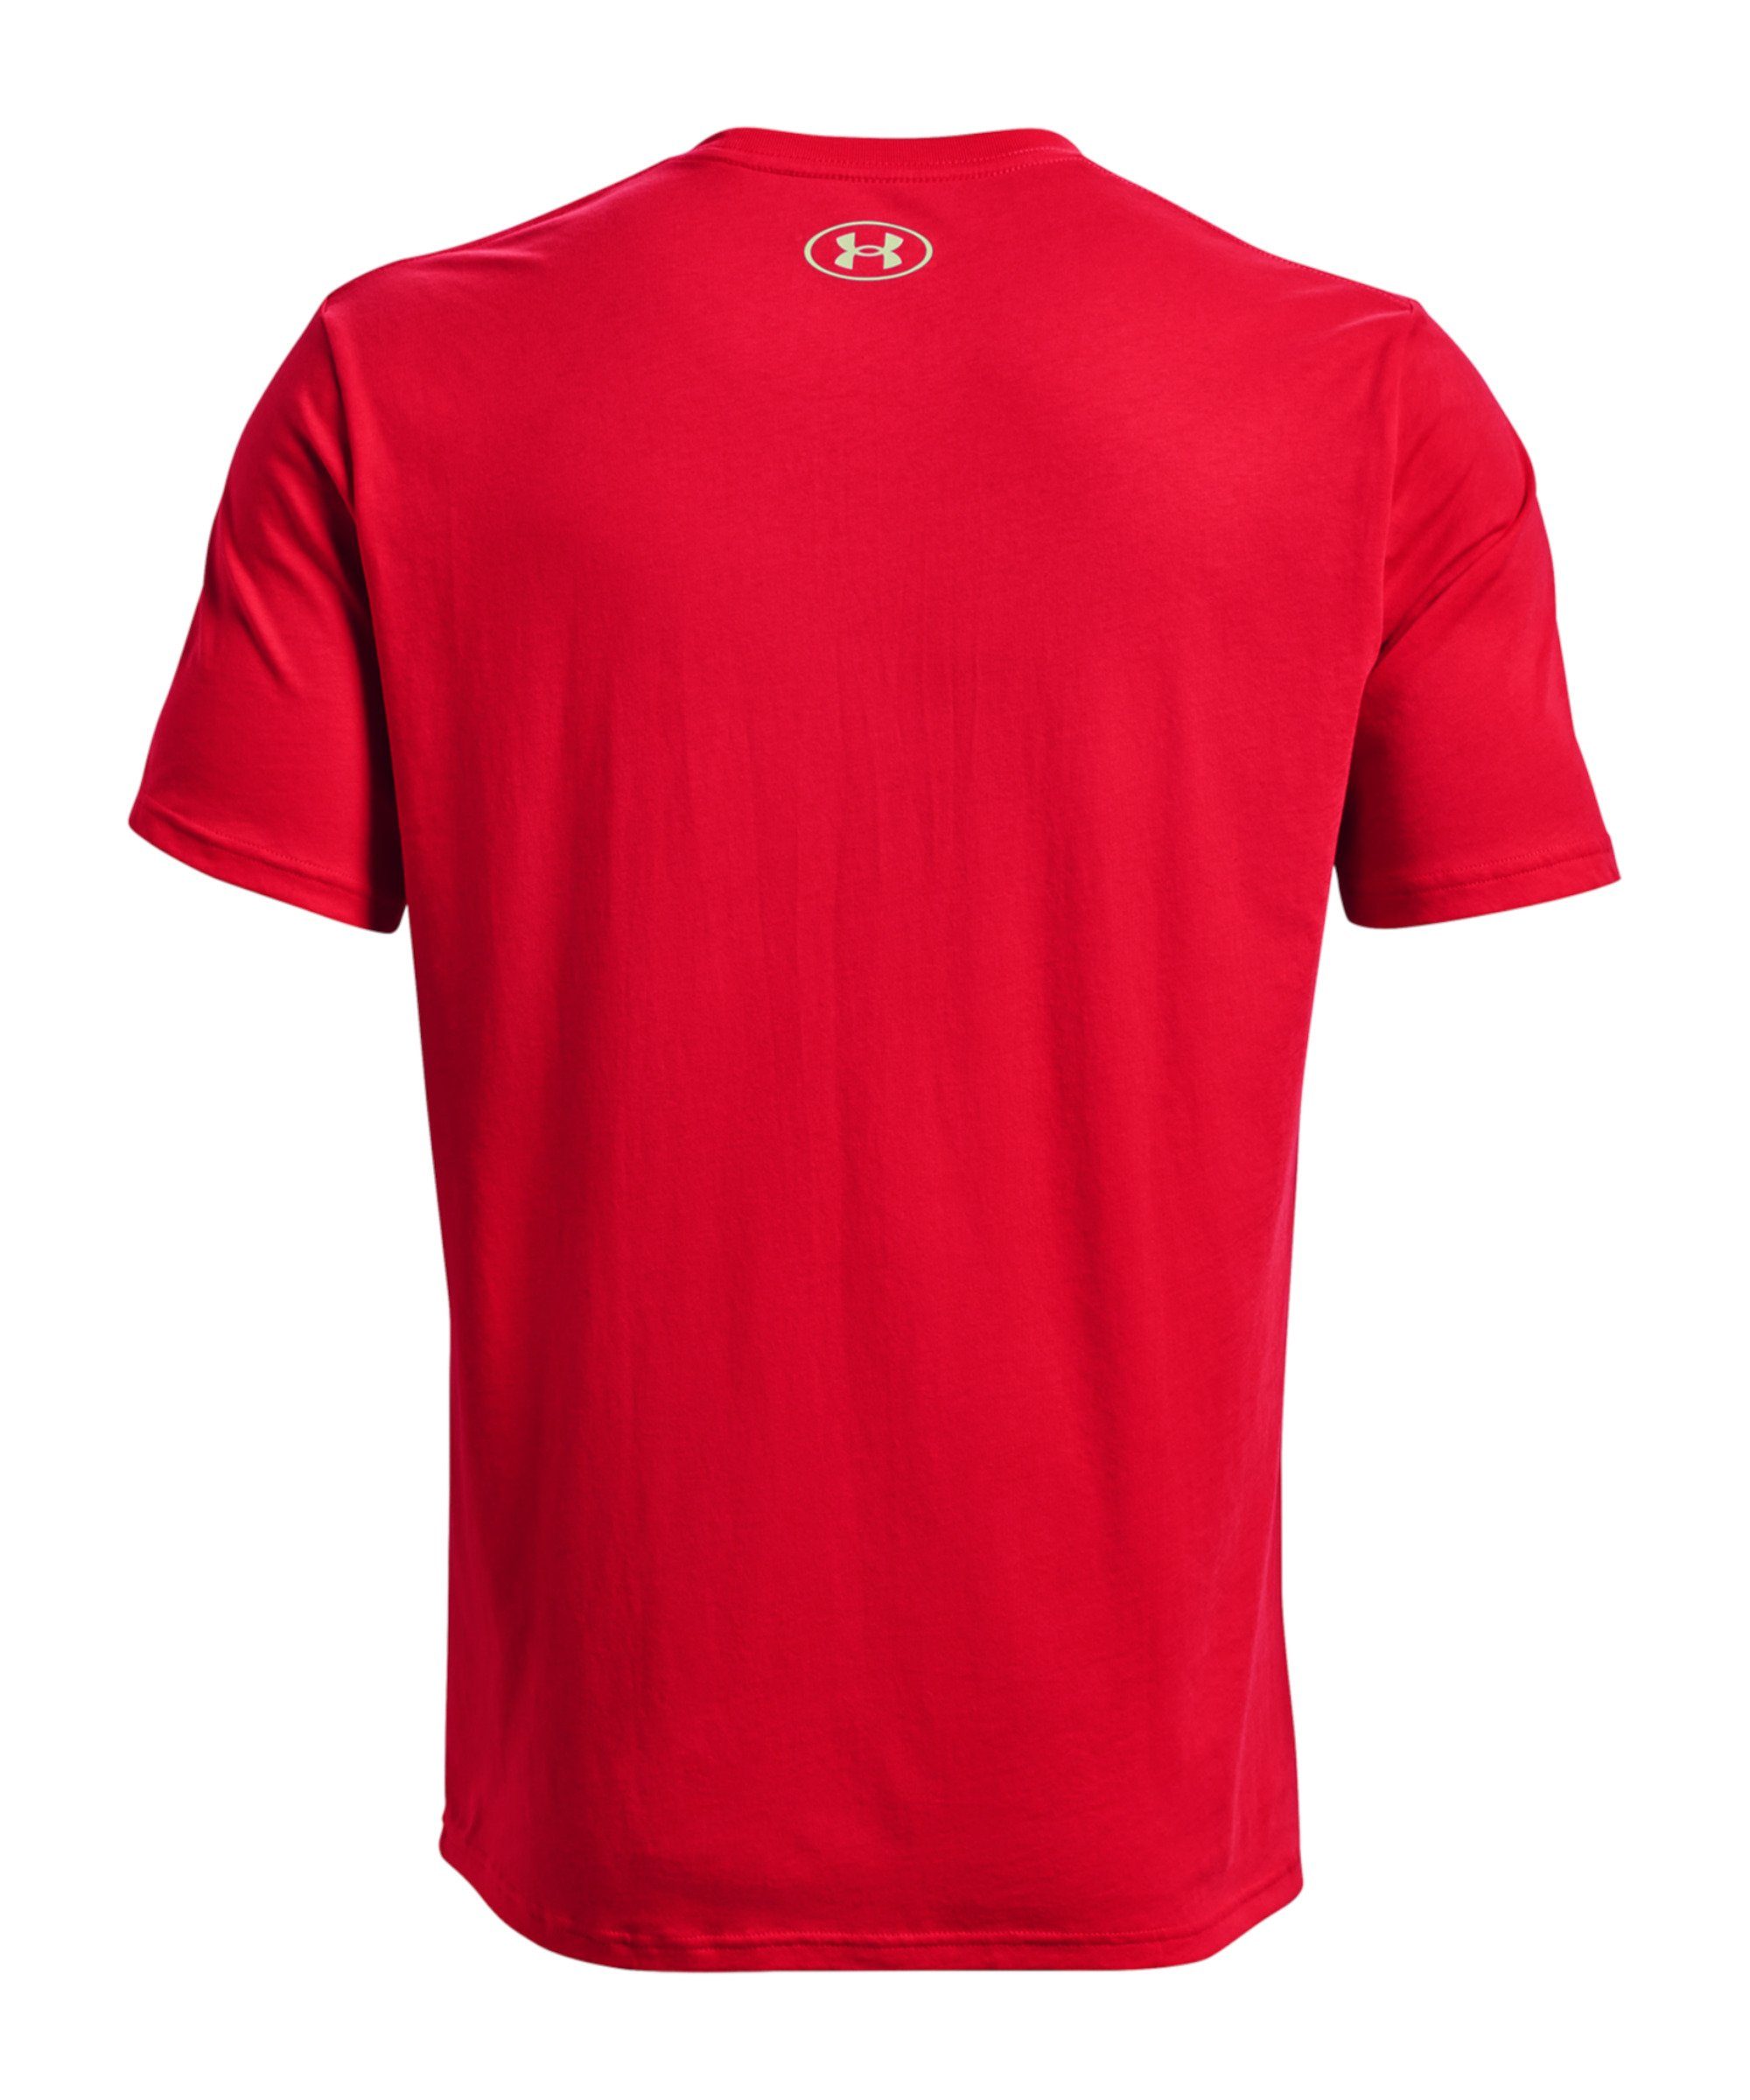 T-Shirt default T-Shirt Wordmark Armour® Under rot Team Issue